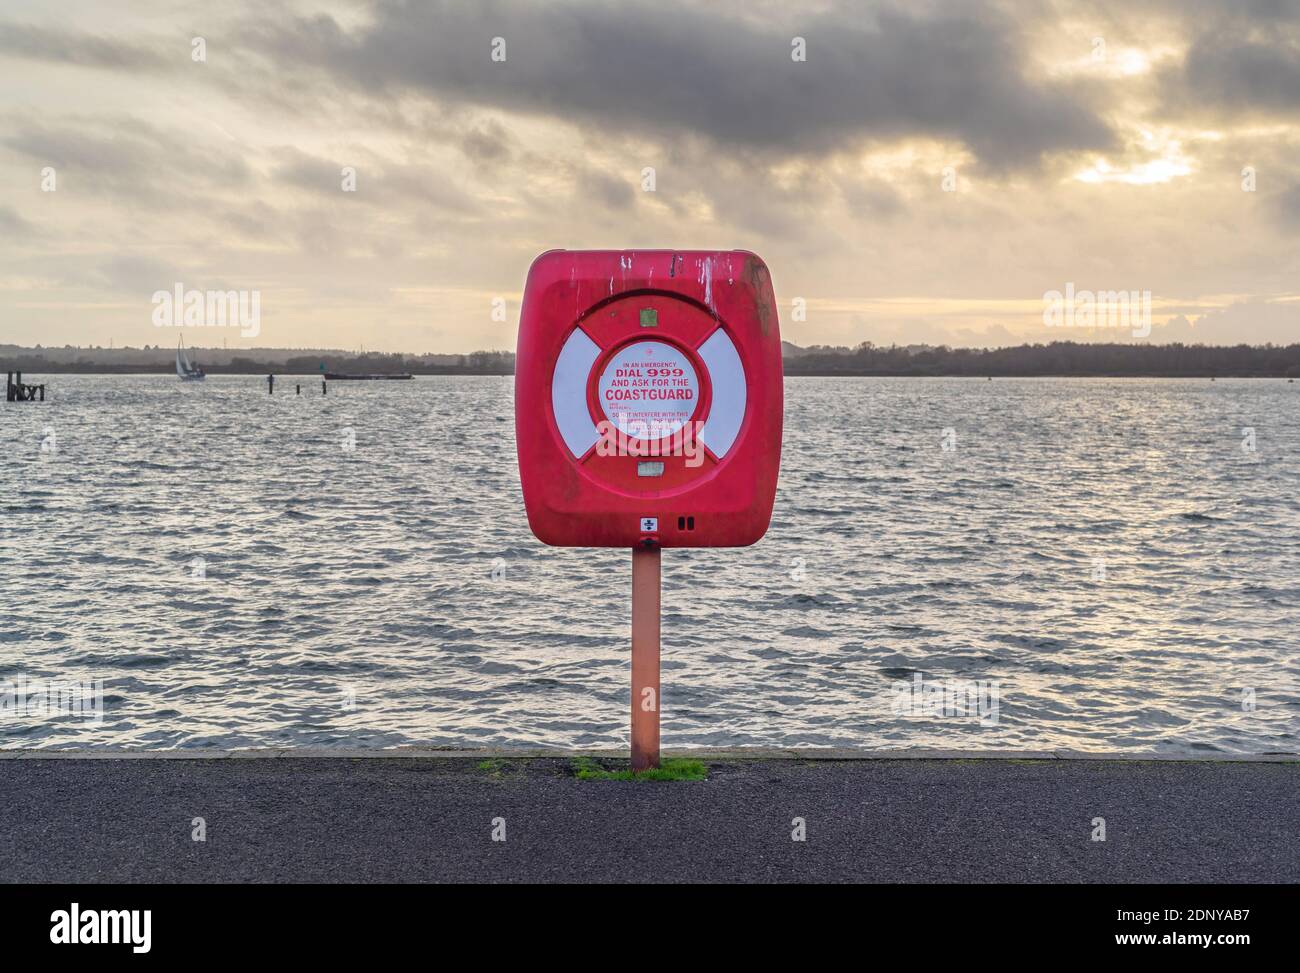 Red Coastguard warning sign and emergency phone number at Southampton waterfront, Southampton, England, UK Stock Photo